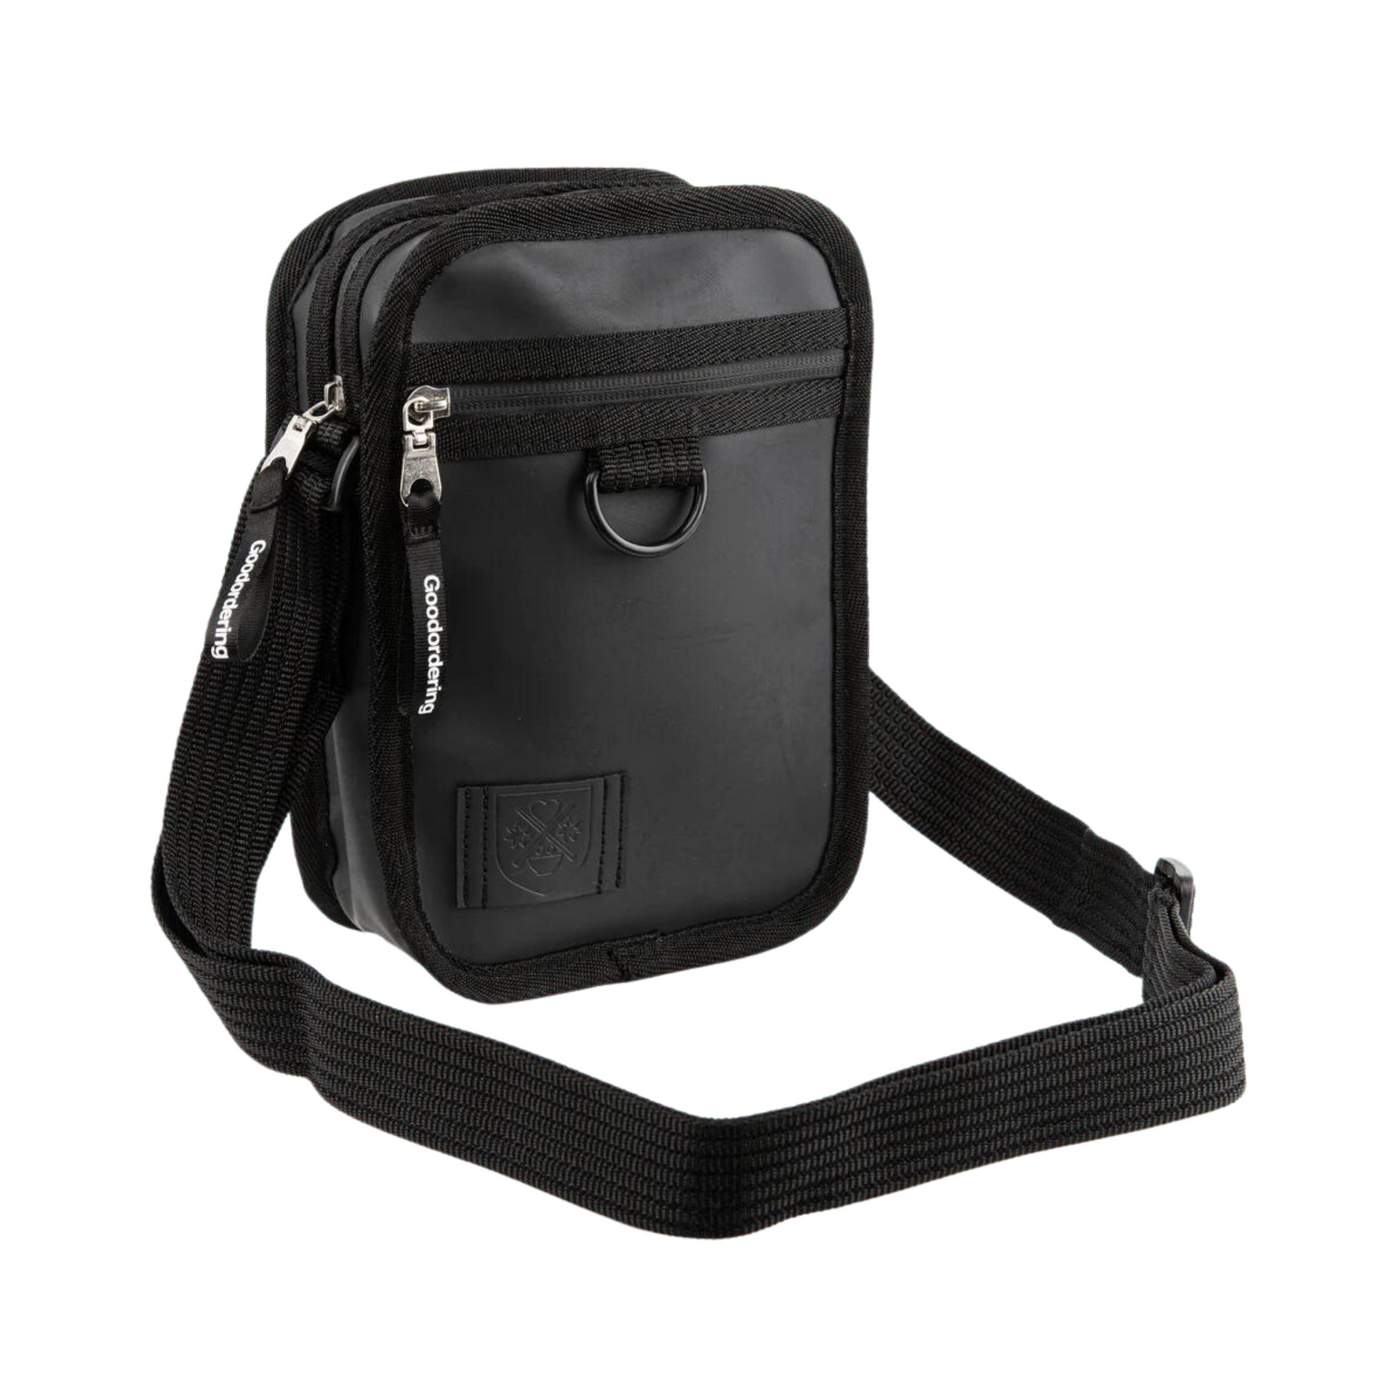 Goodordering Monochrome Gadget Bag Black - Radical Giving